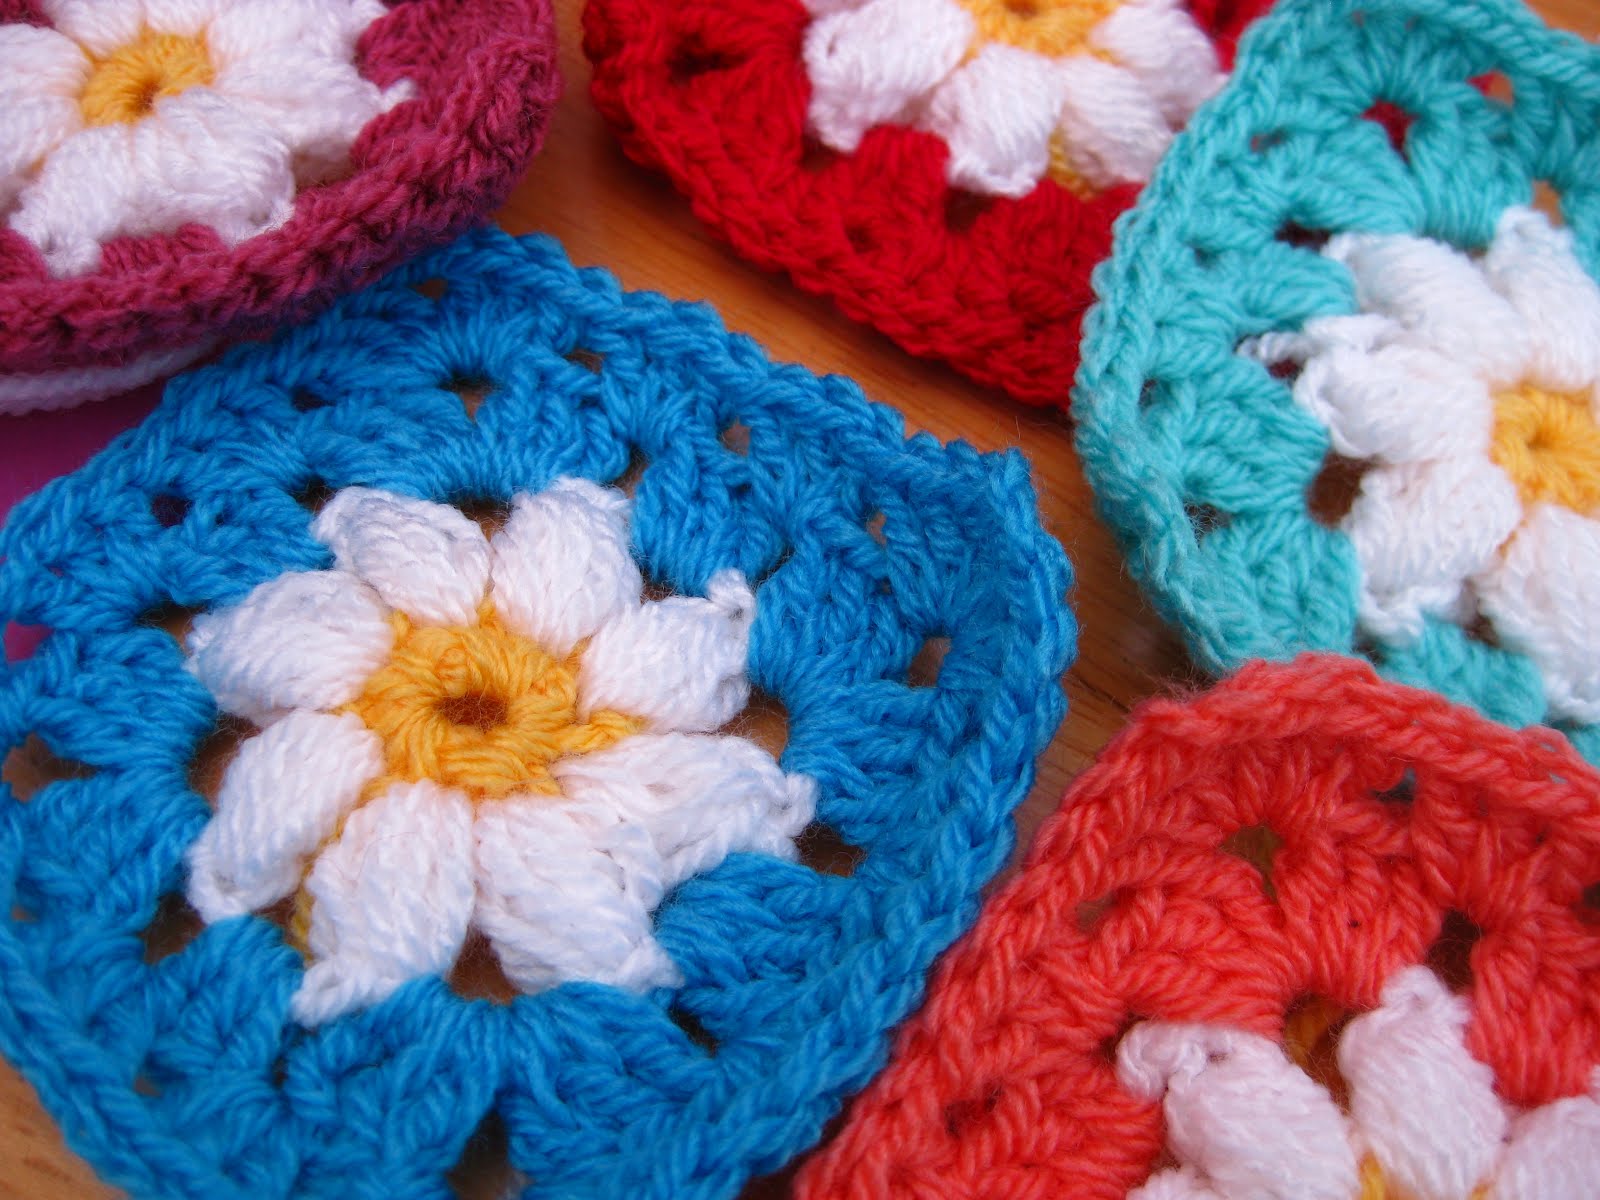 How to Crochet a Granny Square (Beginner Crochet Tutorial) - Confessions of  a Homeschooler